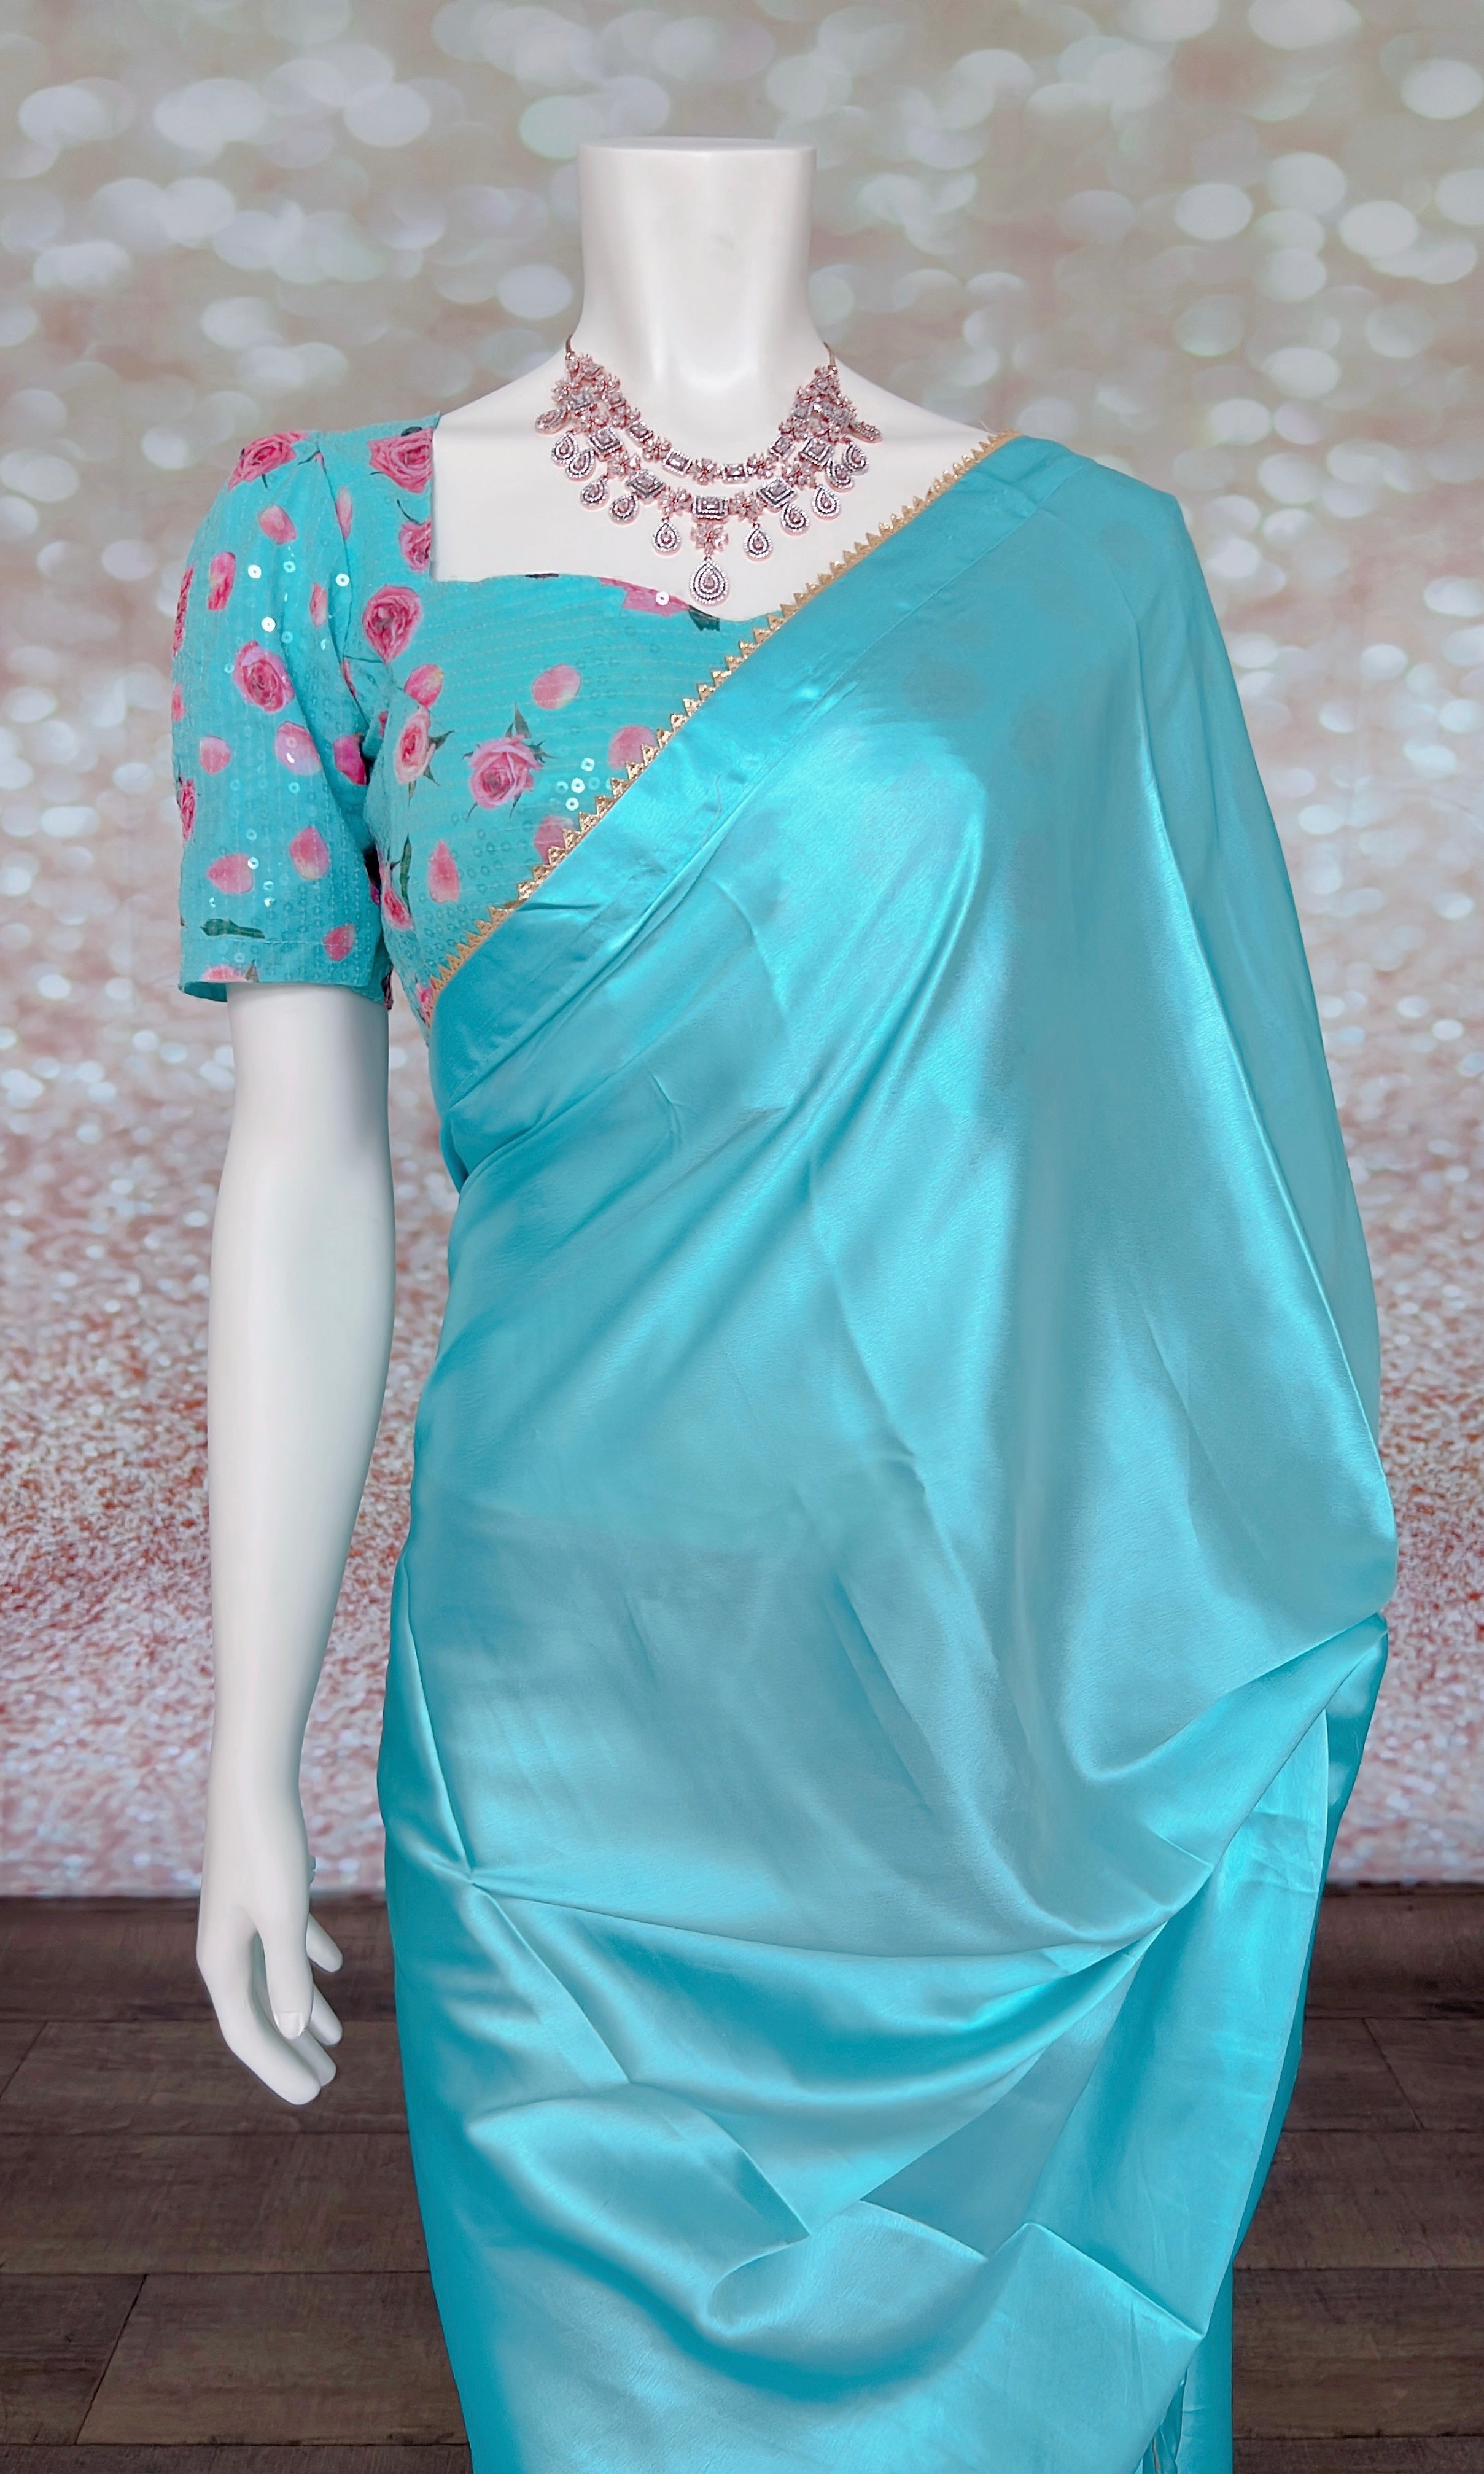 Black saree shapewear with side slit & mermaid shape